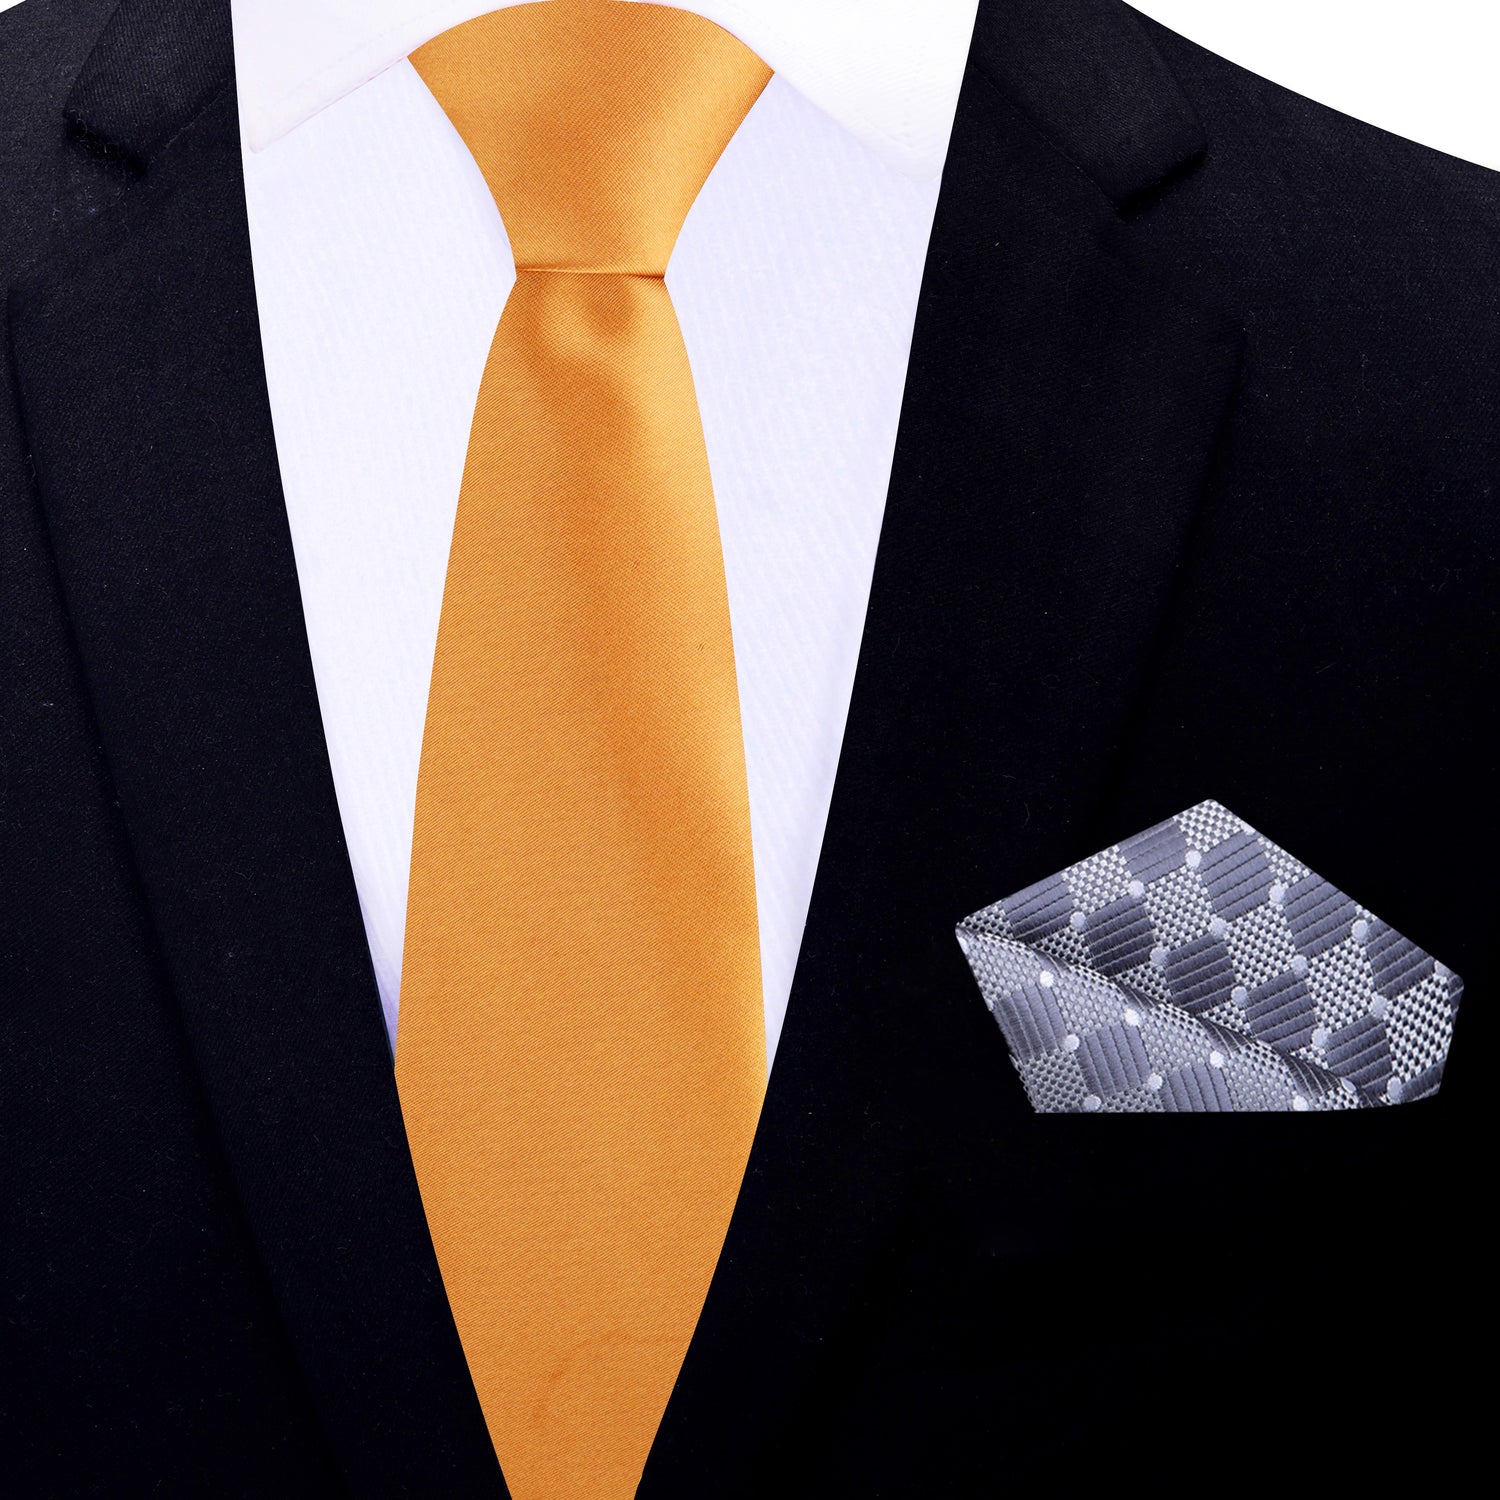 Thin Tie: Marigold Necktie with Grey Geometric Square